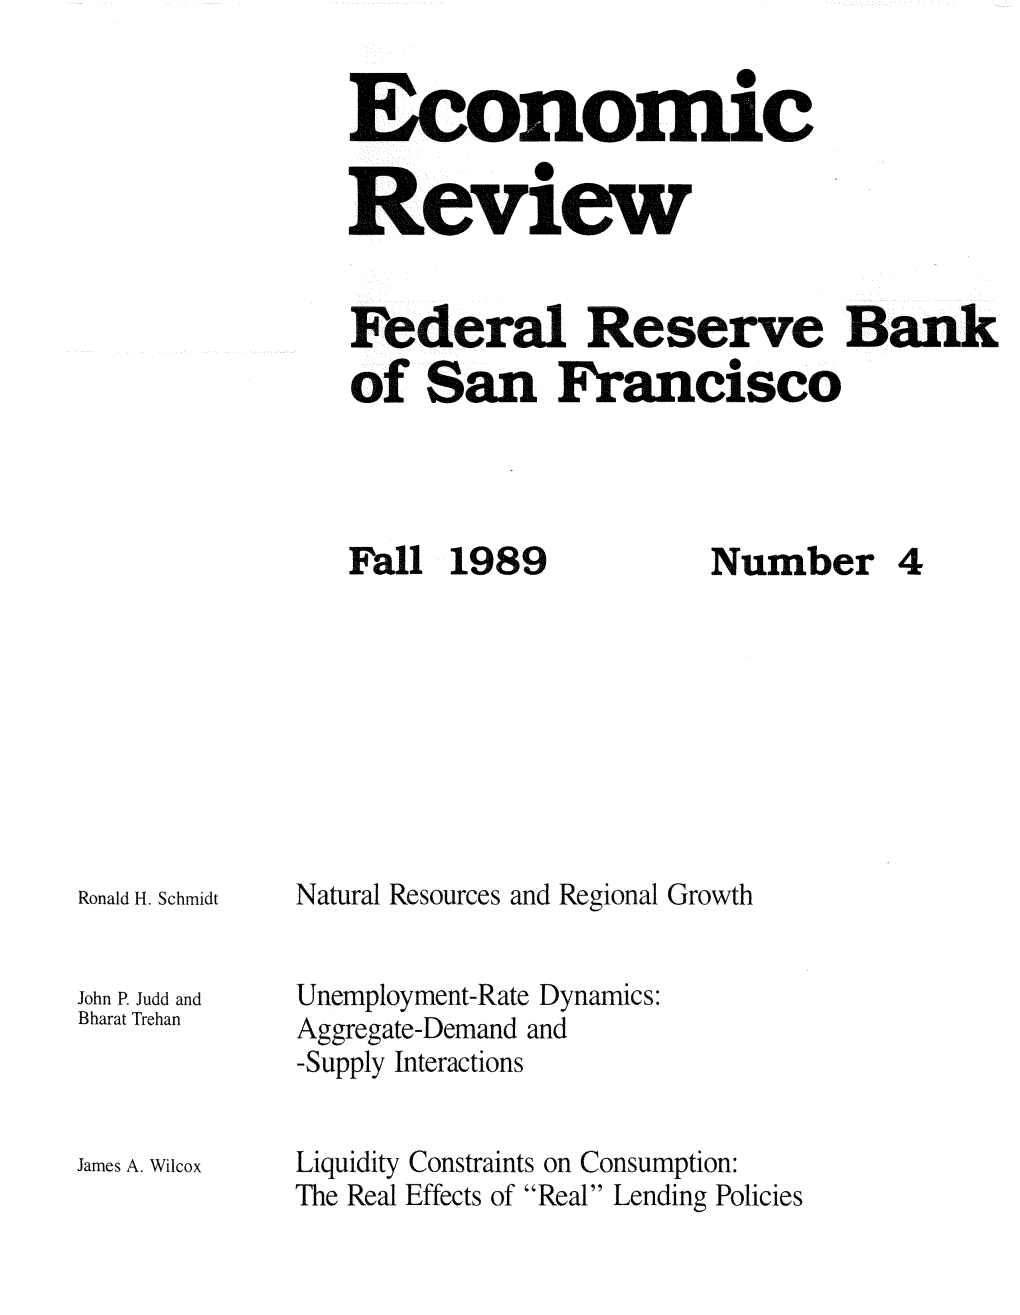 Kconomic Review Federal Reserve Bank of San Francisco